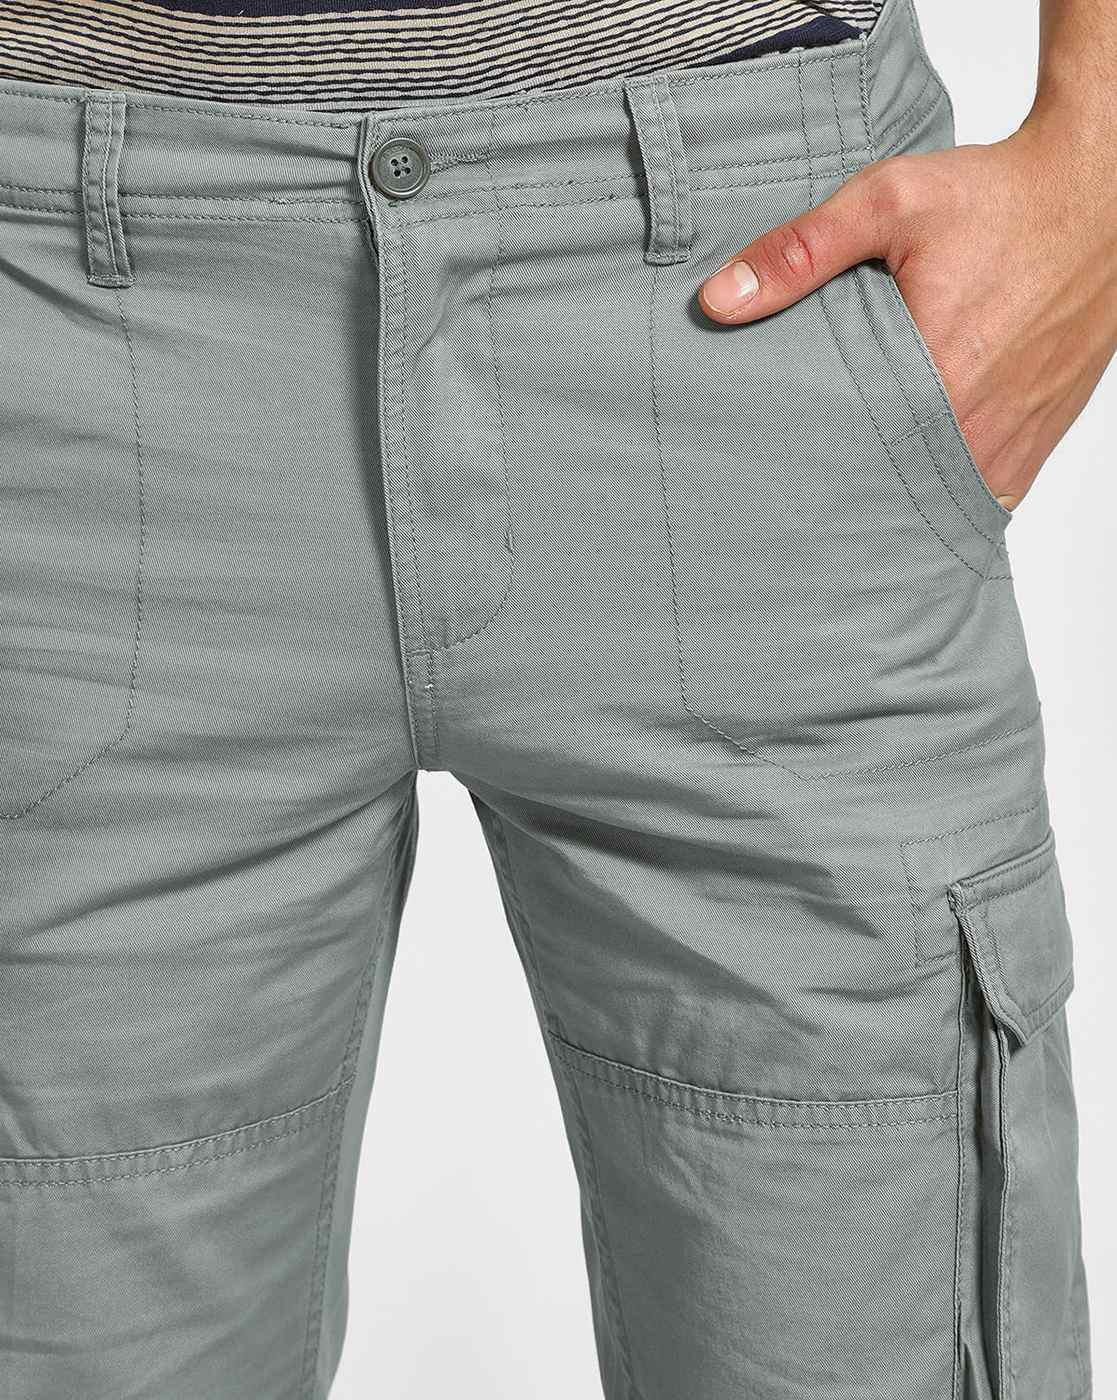 i jeans by Buffalo Mens Denim Shorts, 33 | Mens denim shorts, Denim shorts,  Denim